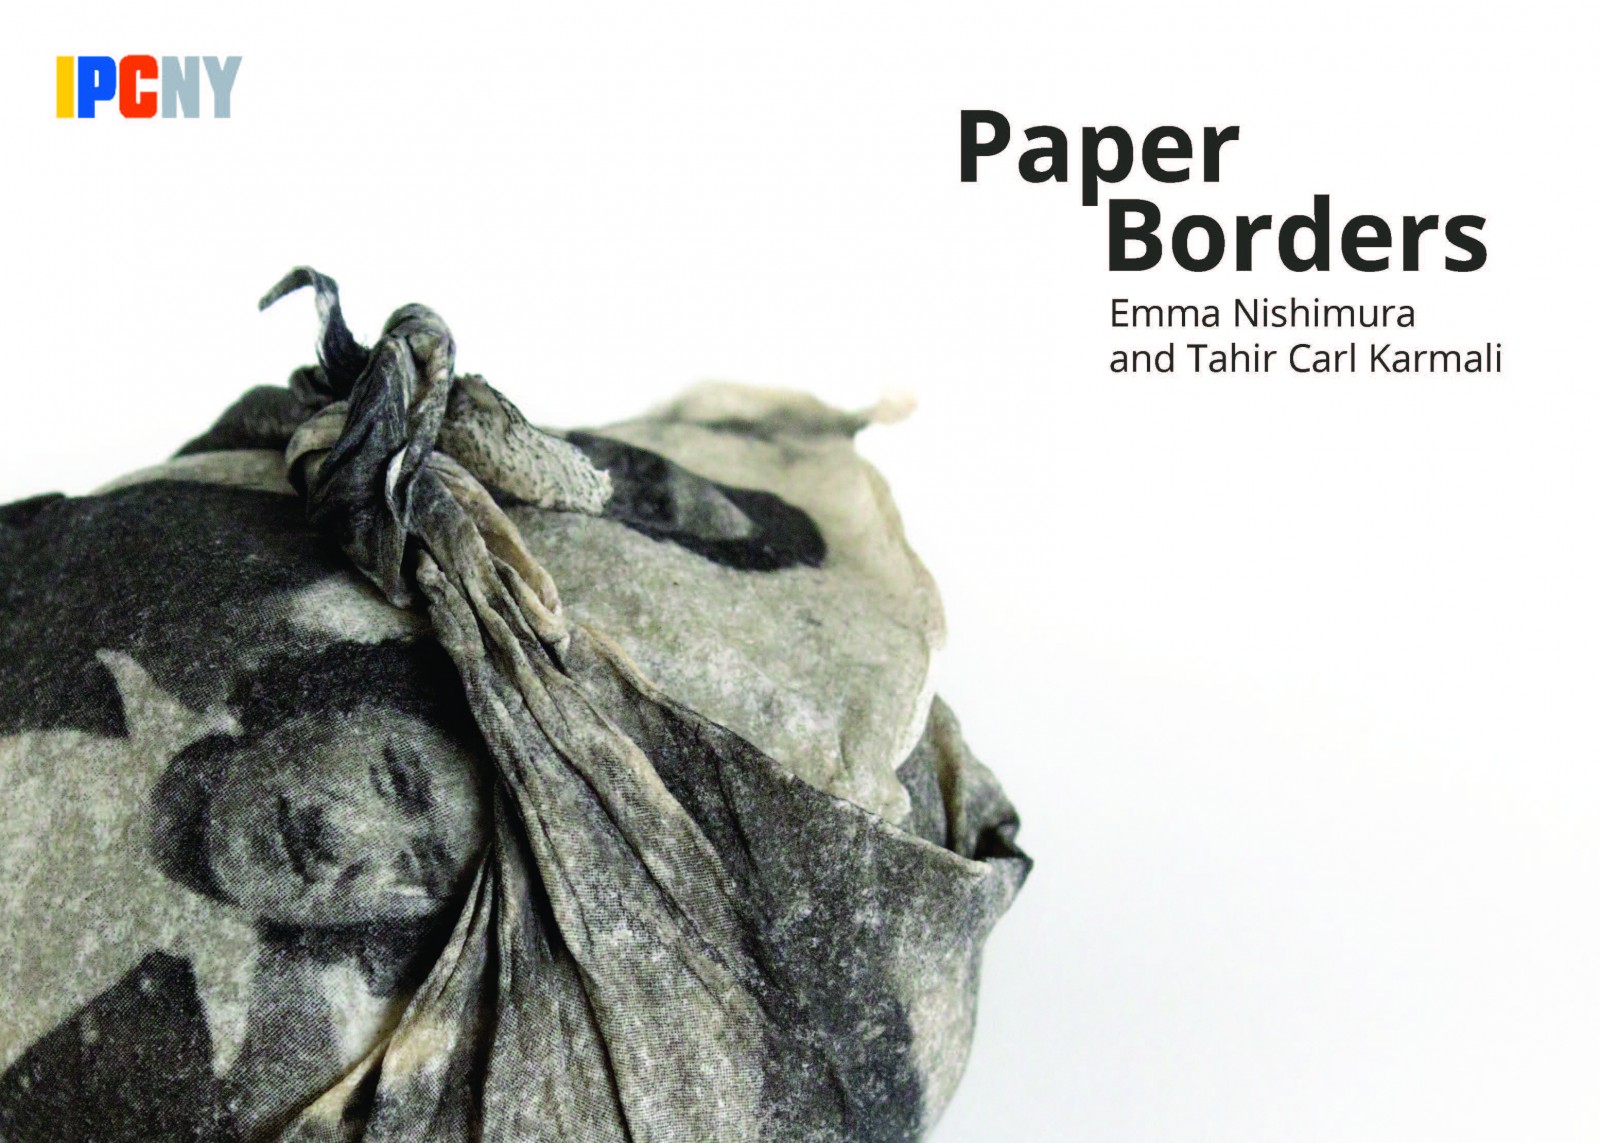 image of a figurative paper sculpture